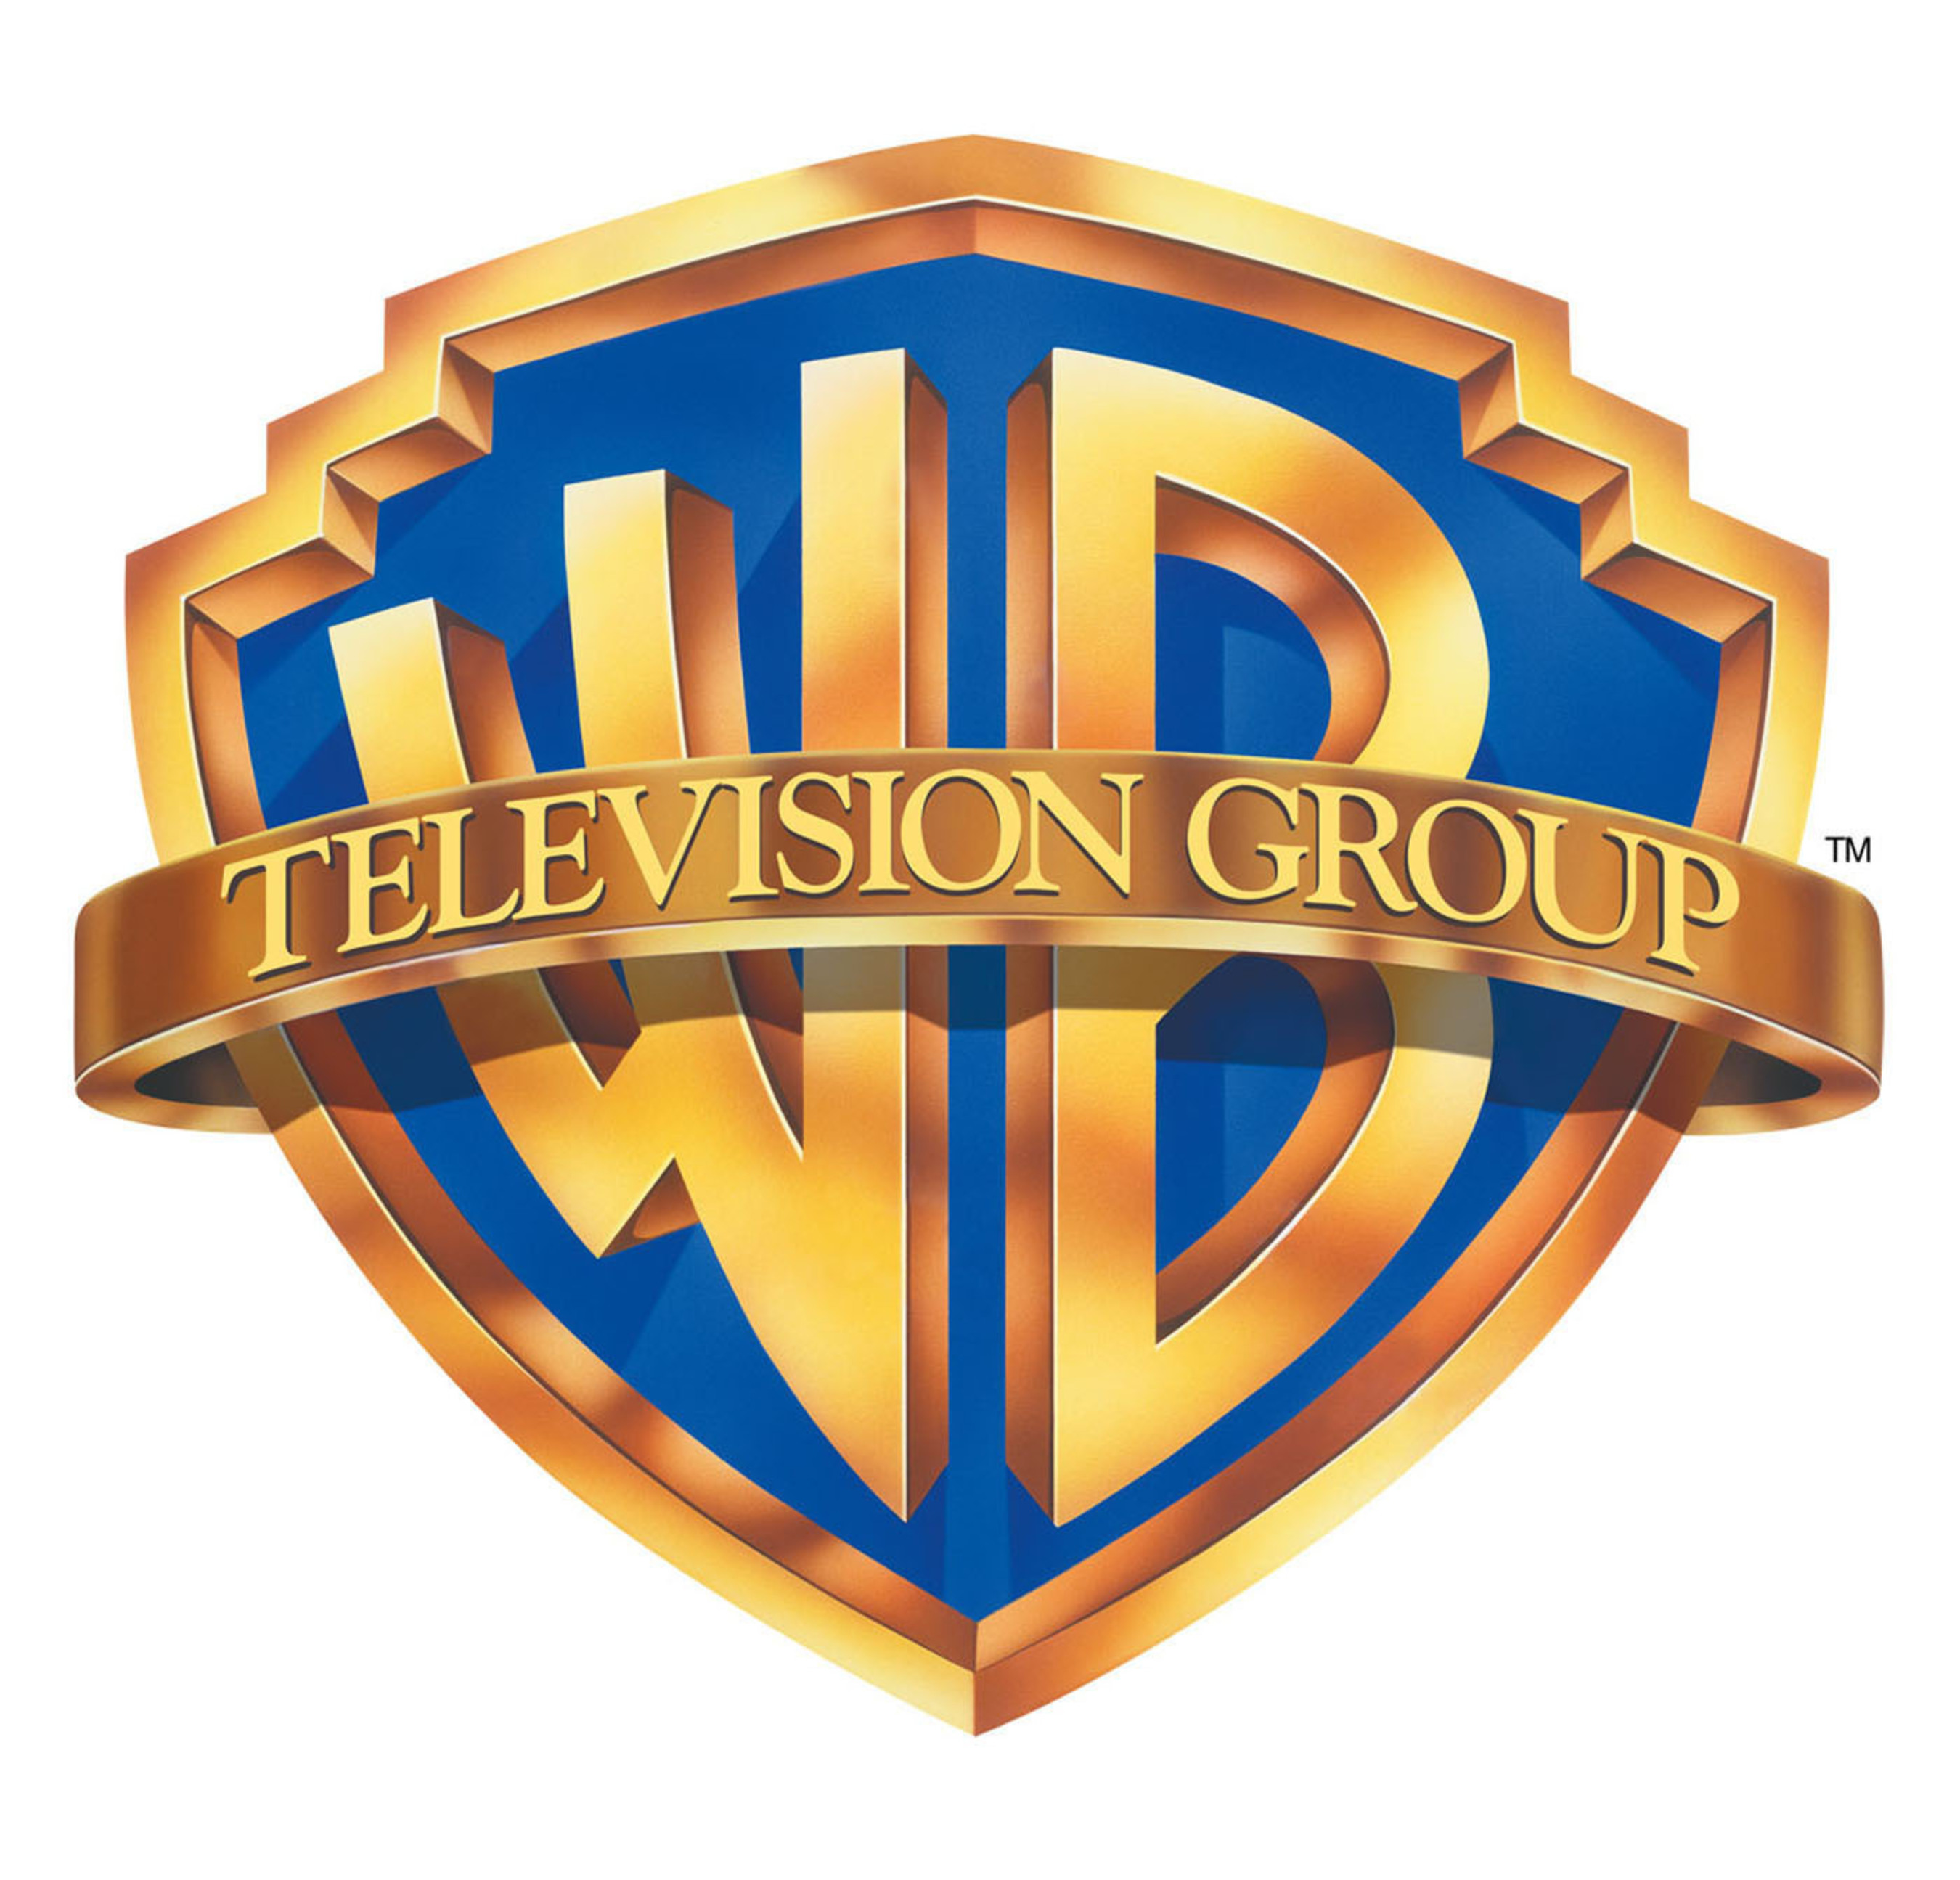 Warner Bros. Television Group logo. (PRNewsFoto/Netflix, Inc.) (PRNewsFoto/NETFLIX, INC.)